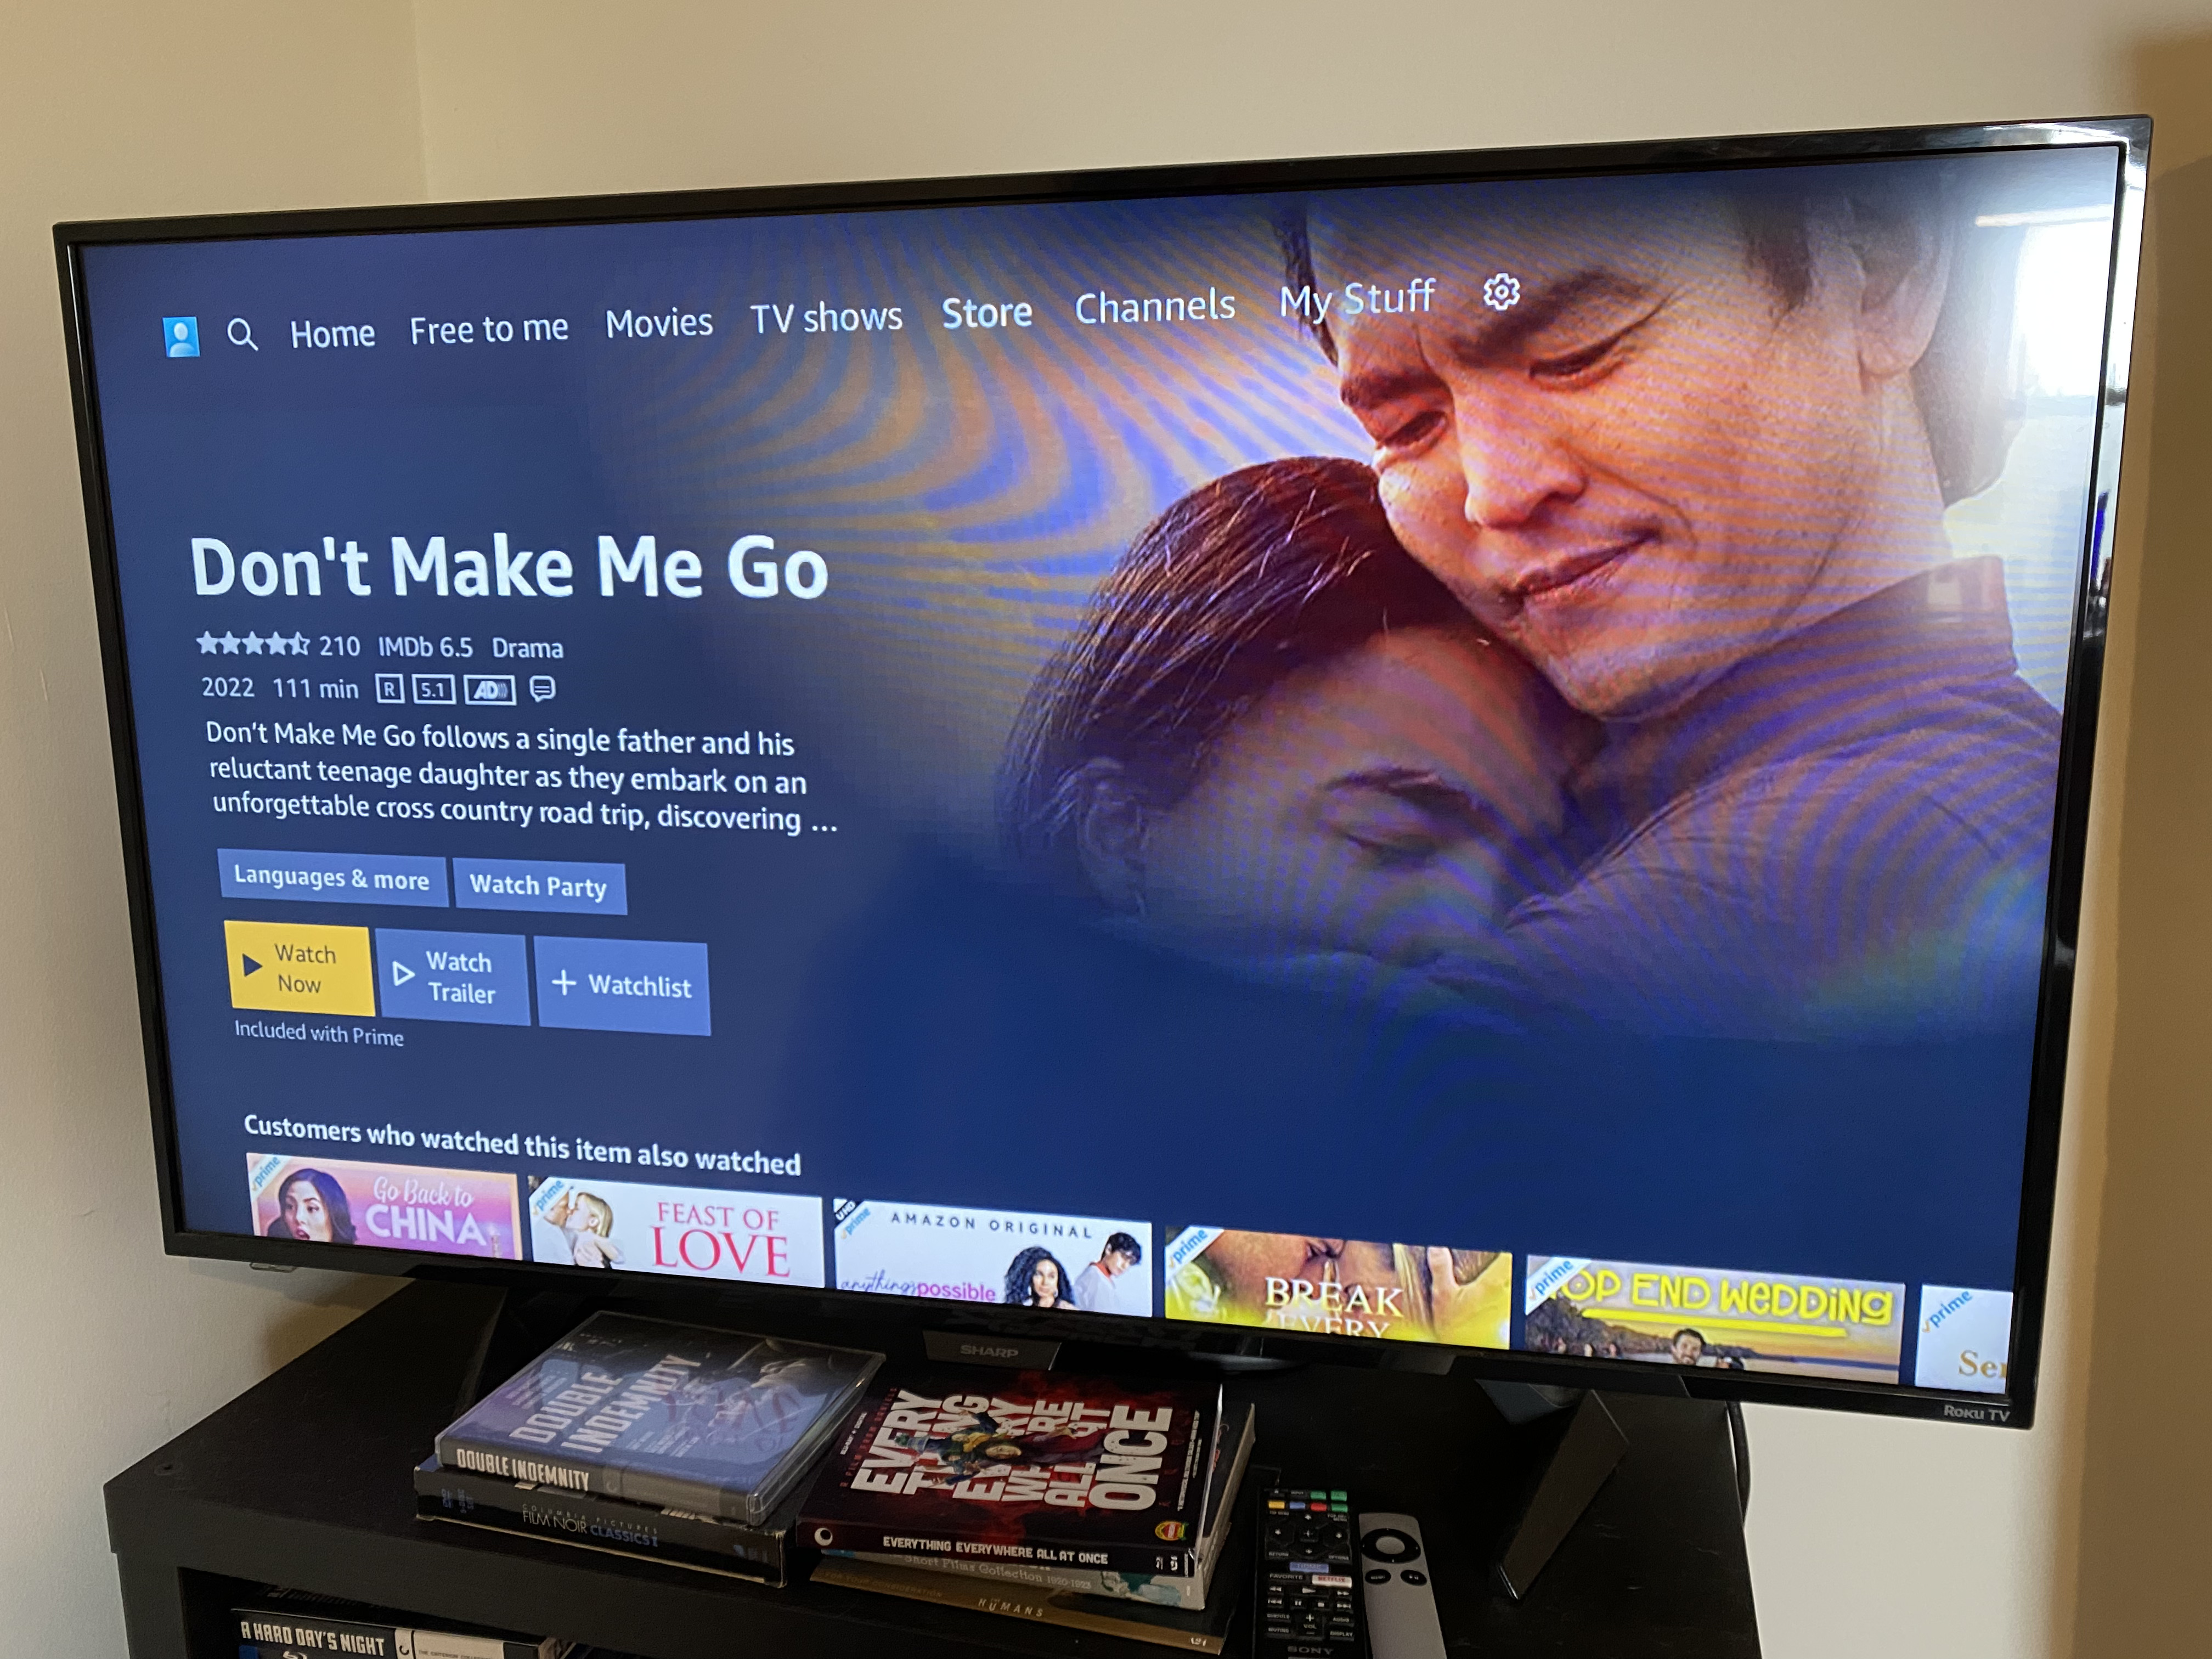 Amazon Prime Video smart TV user interface, promoting 'Don't Make Me Go'